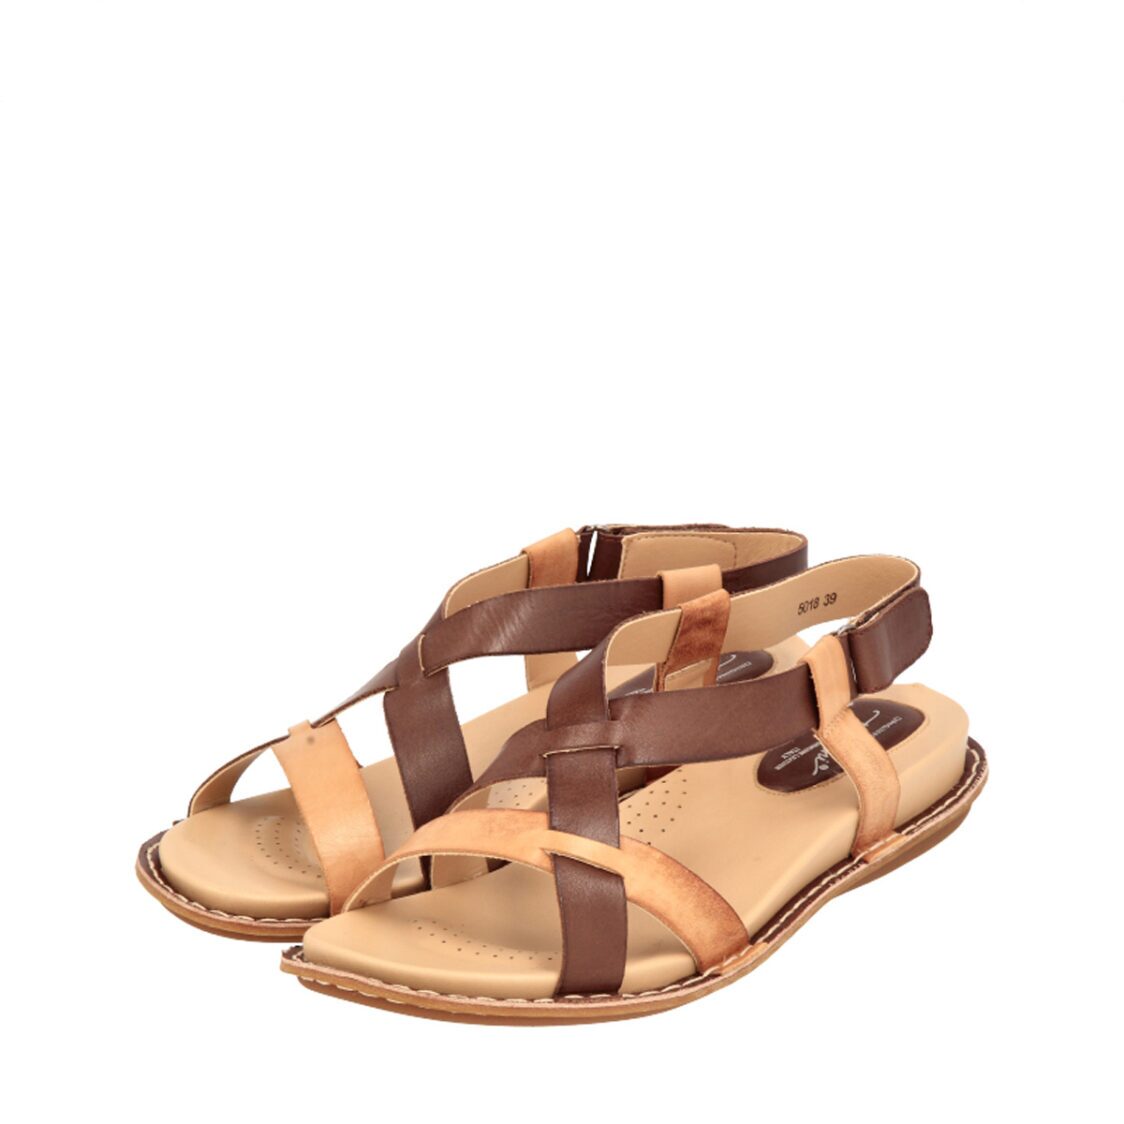 Barani 5018 Brown Multi Leather Sandals Cross Strap